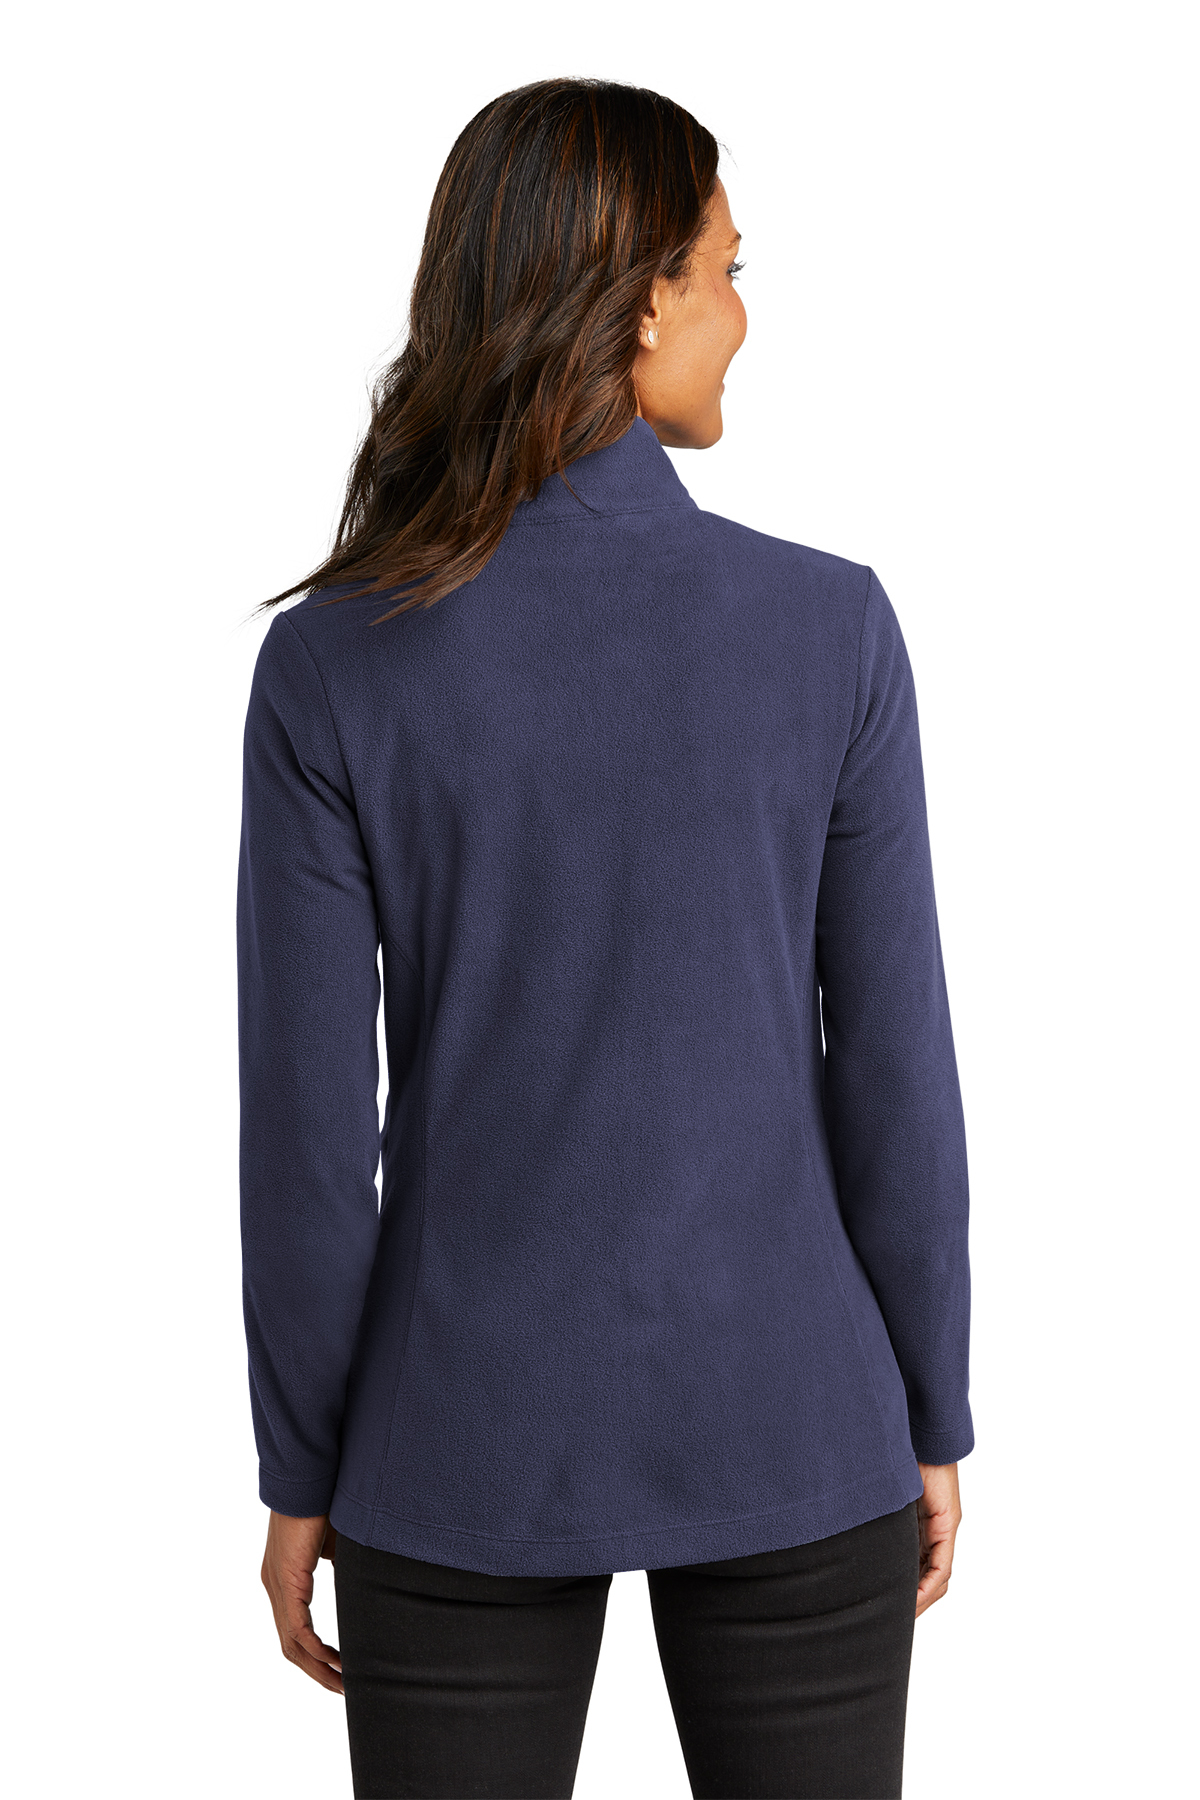 Port Authority Ladies Accord Microfleece Jacket | Product | SanMar